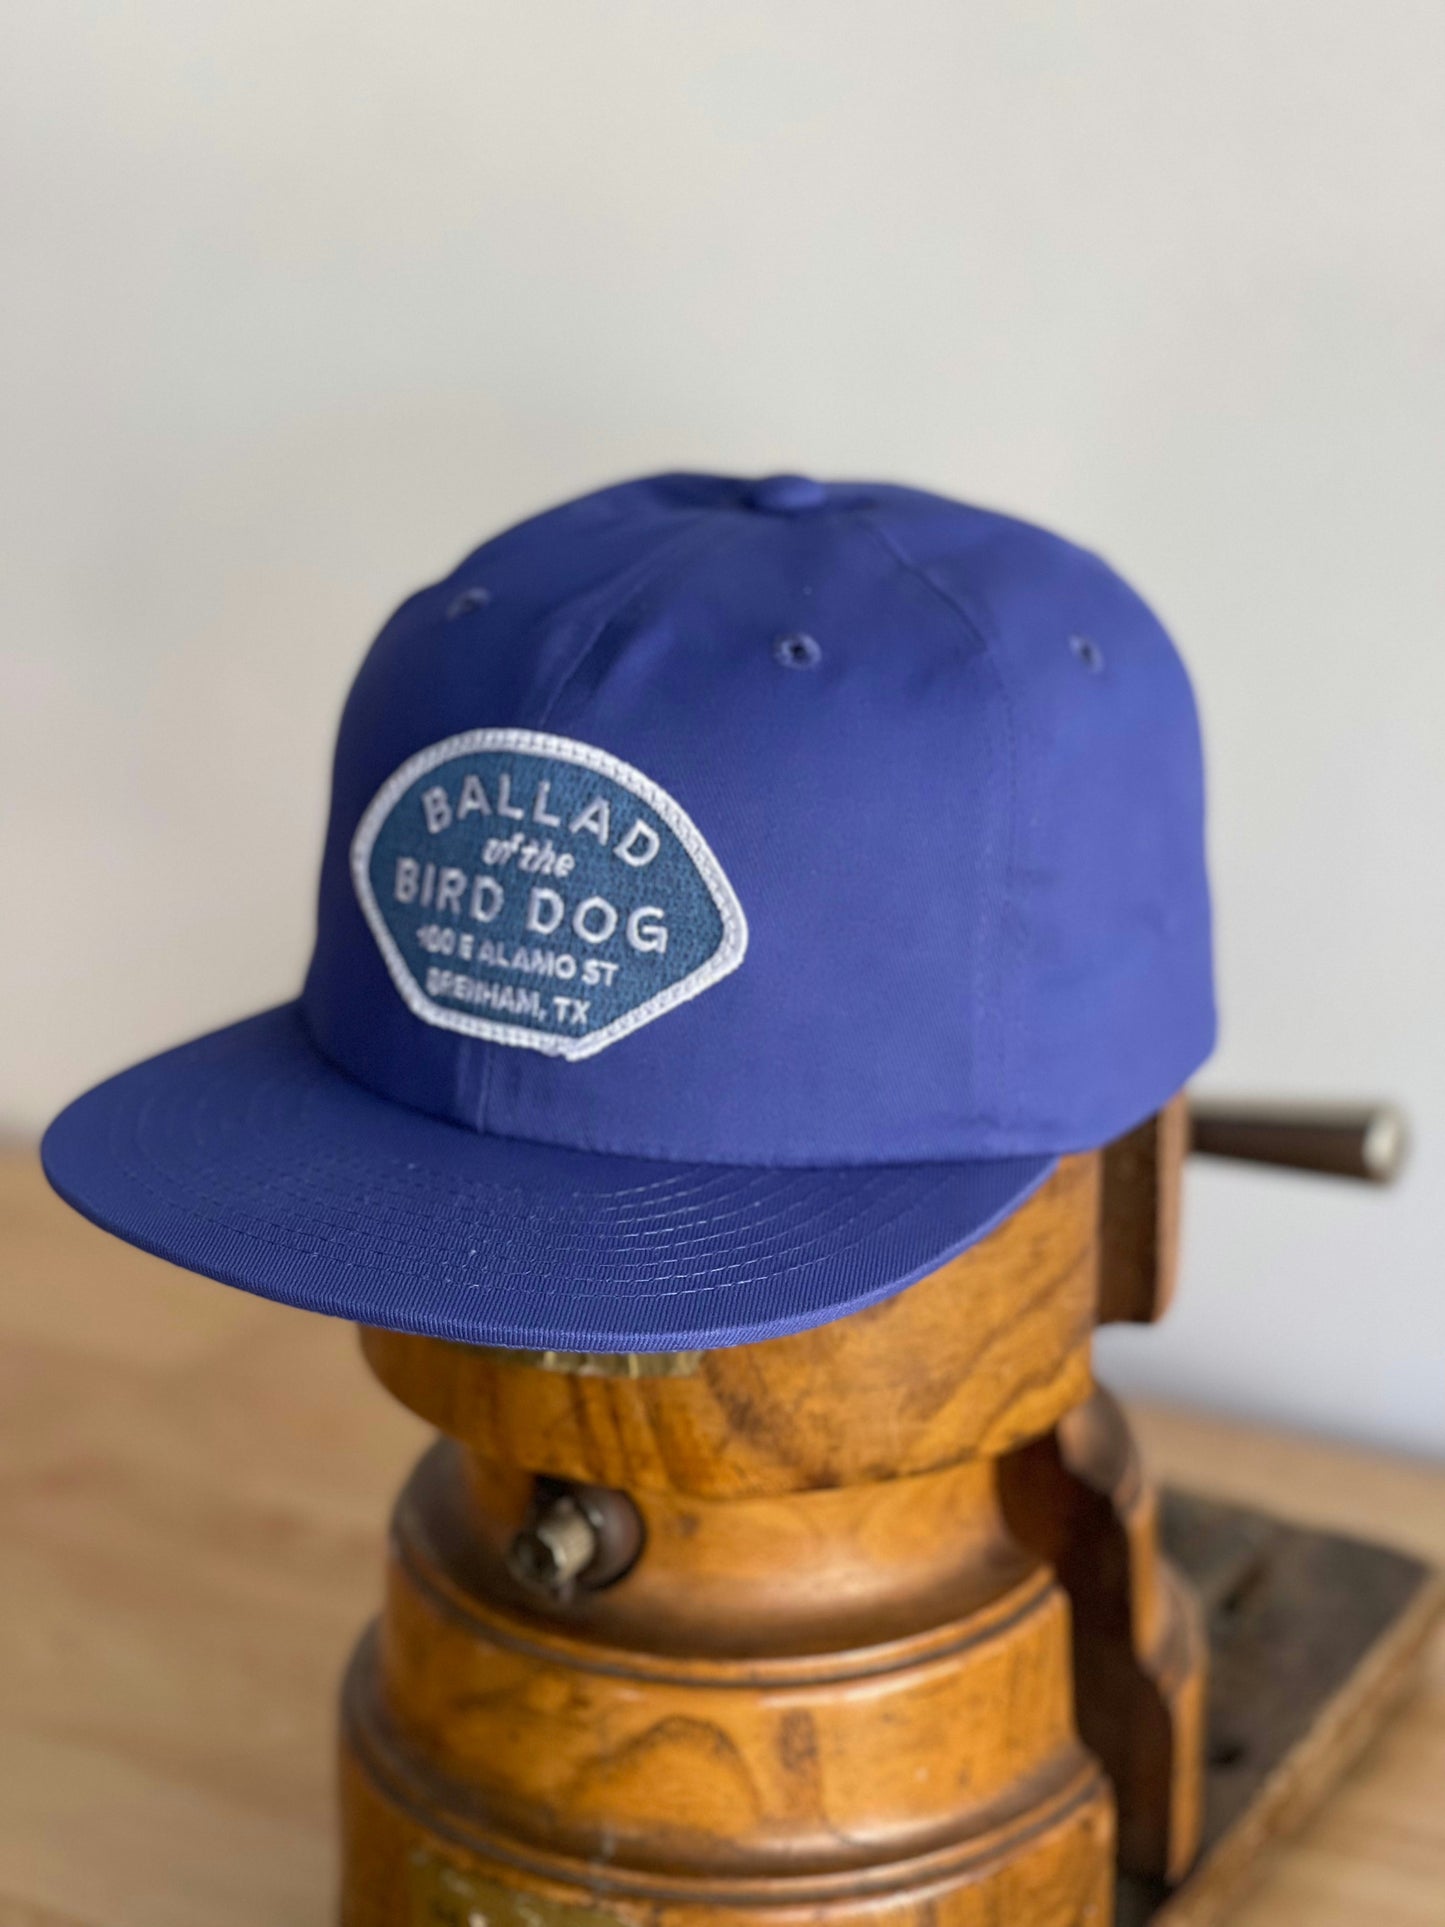 Shop Hat | Home Base Ballad Of The Bird Dog - Accessories